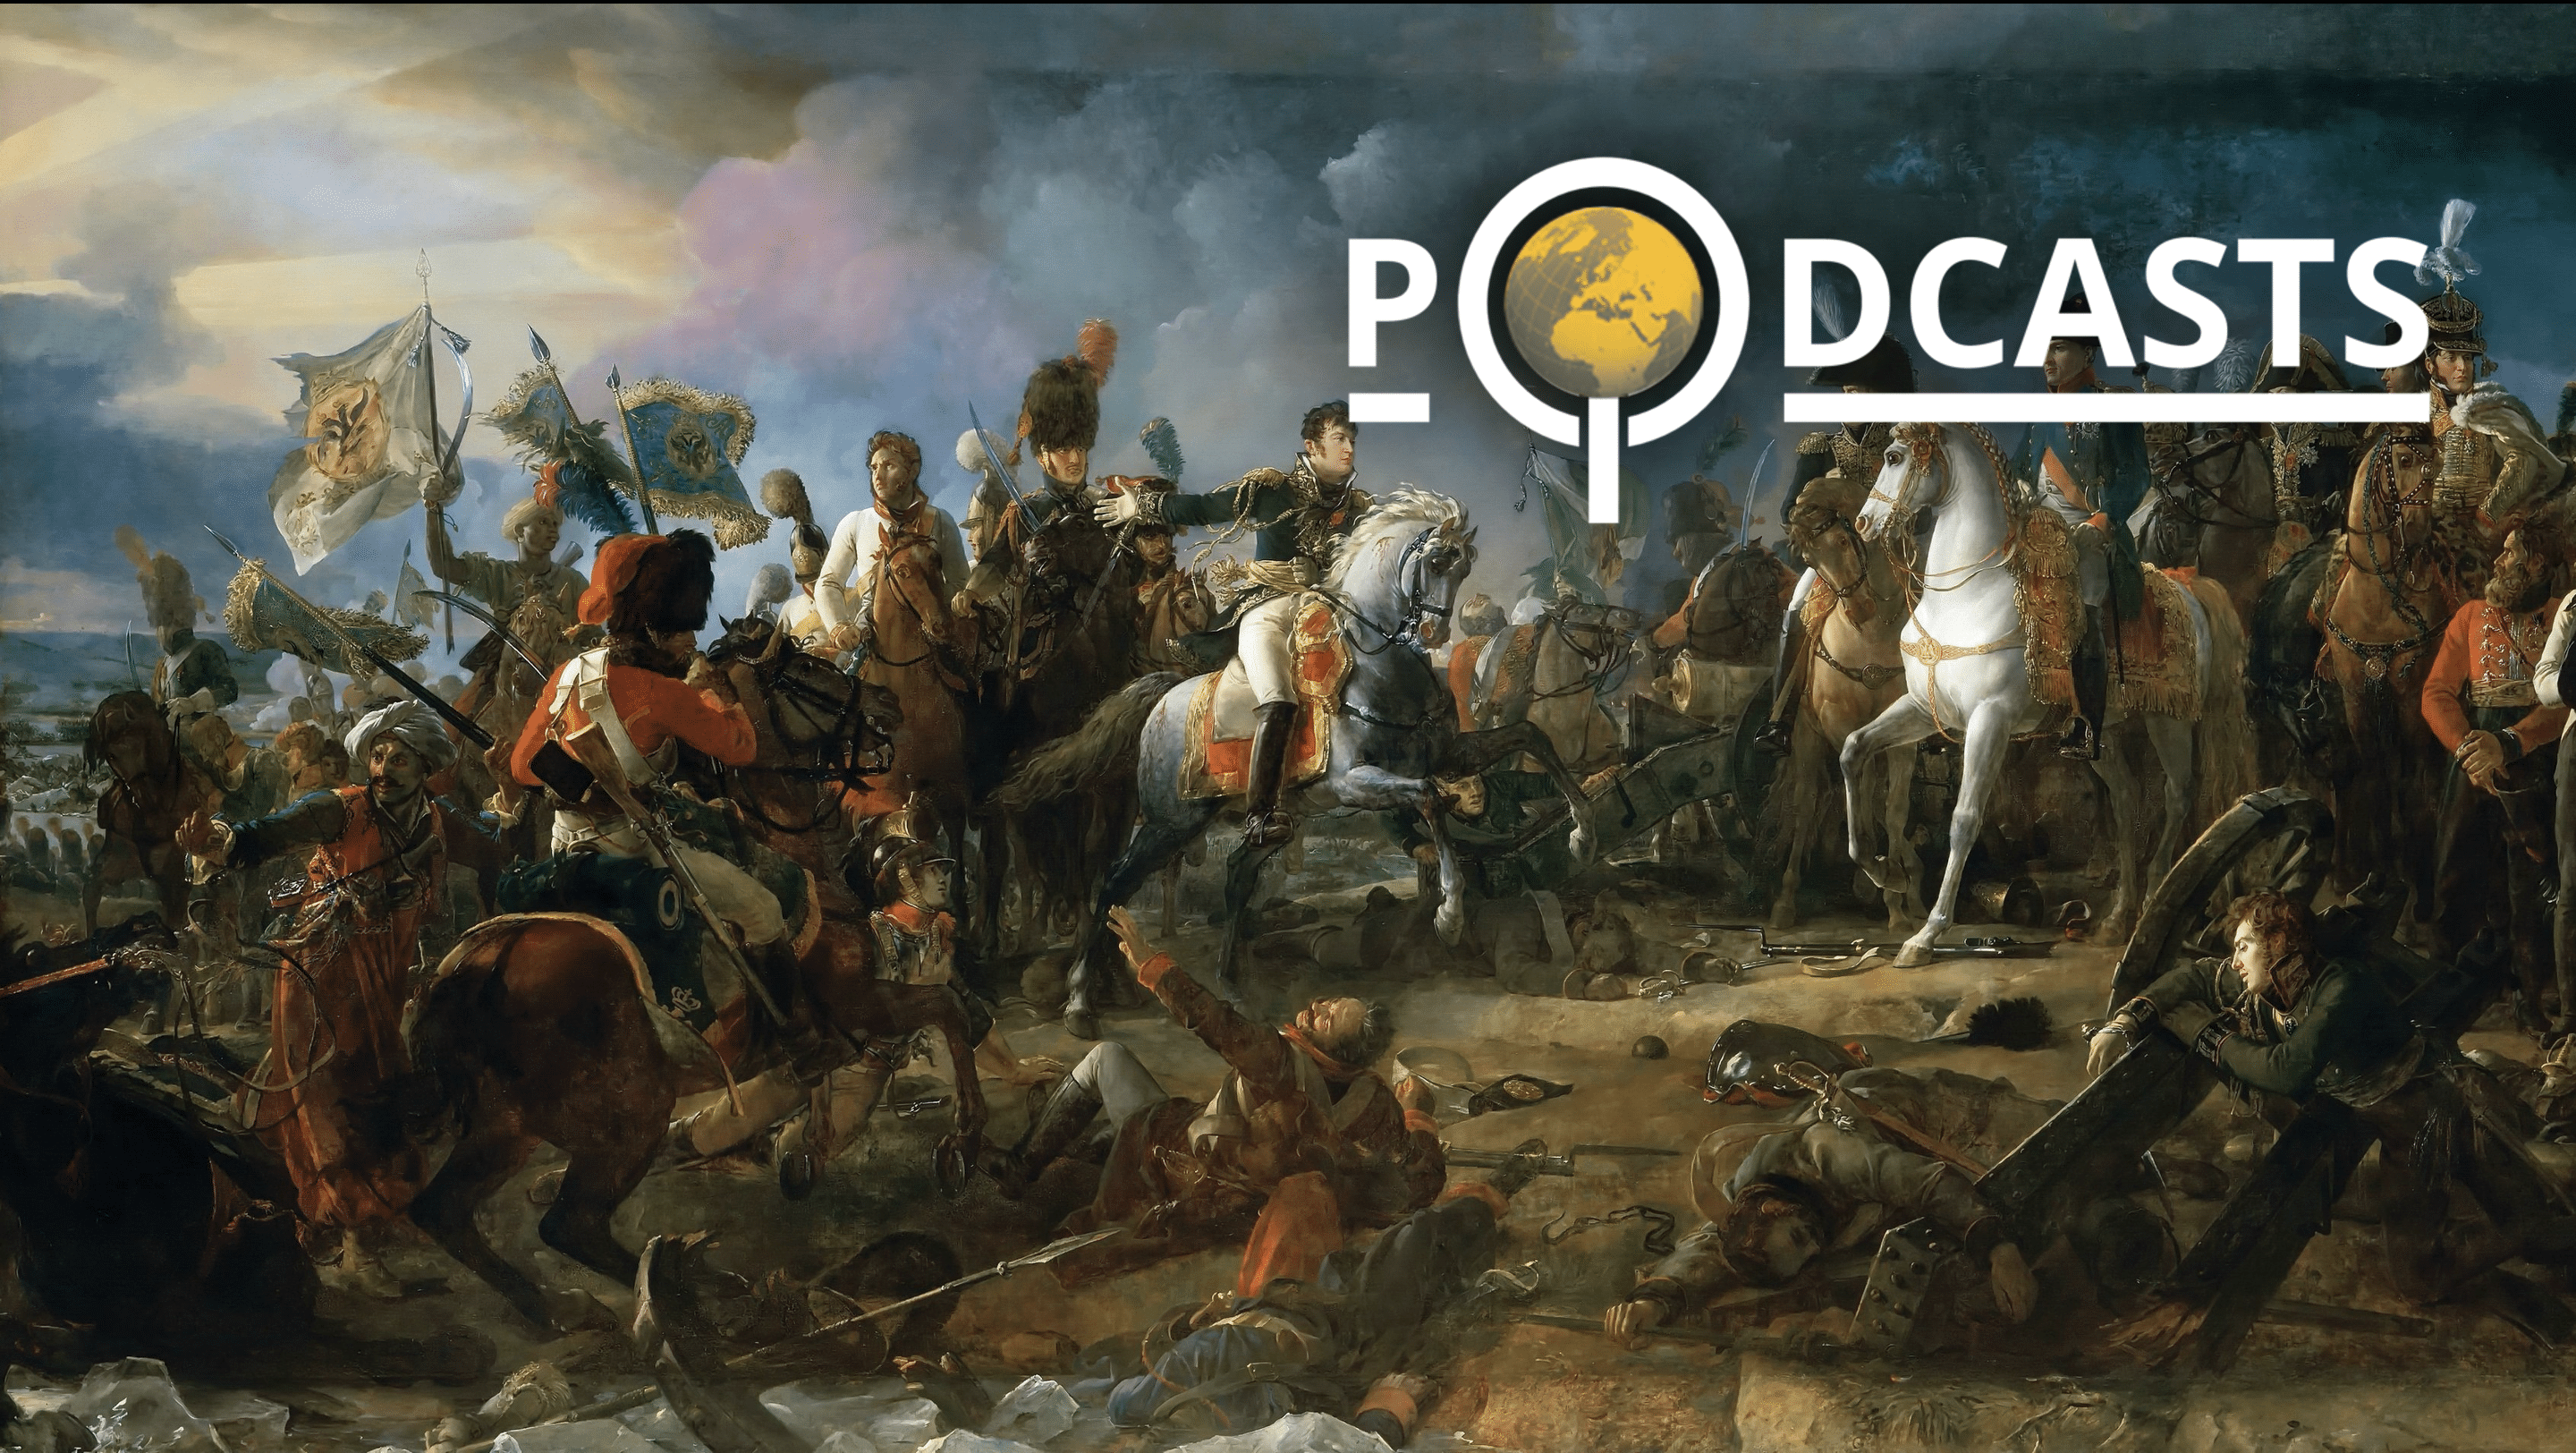 Podcast – L’héritage jurique de Napoléon. Daniel Polverelli